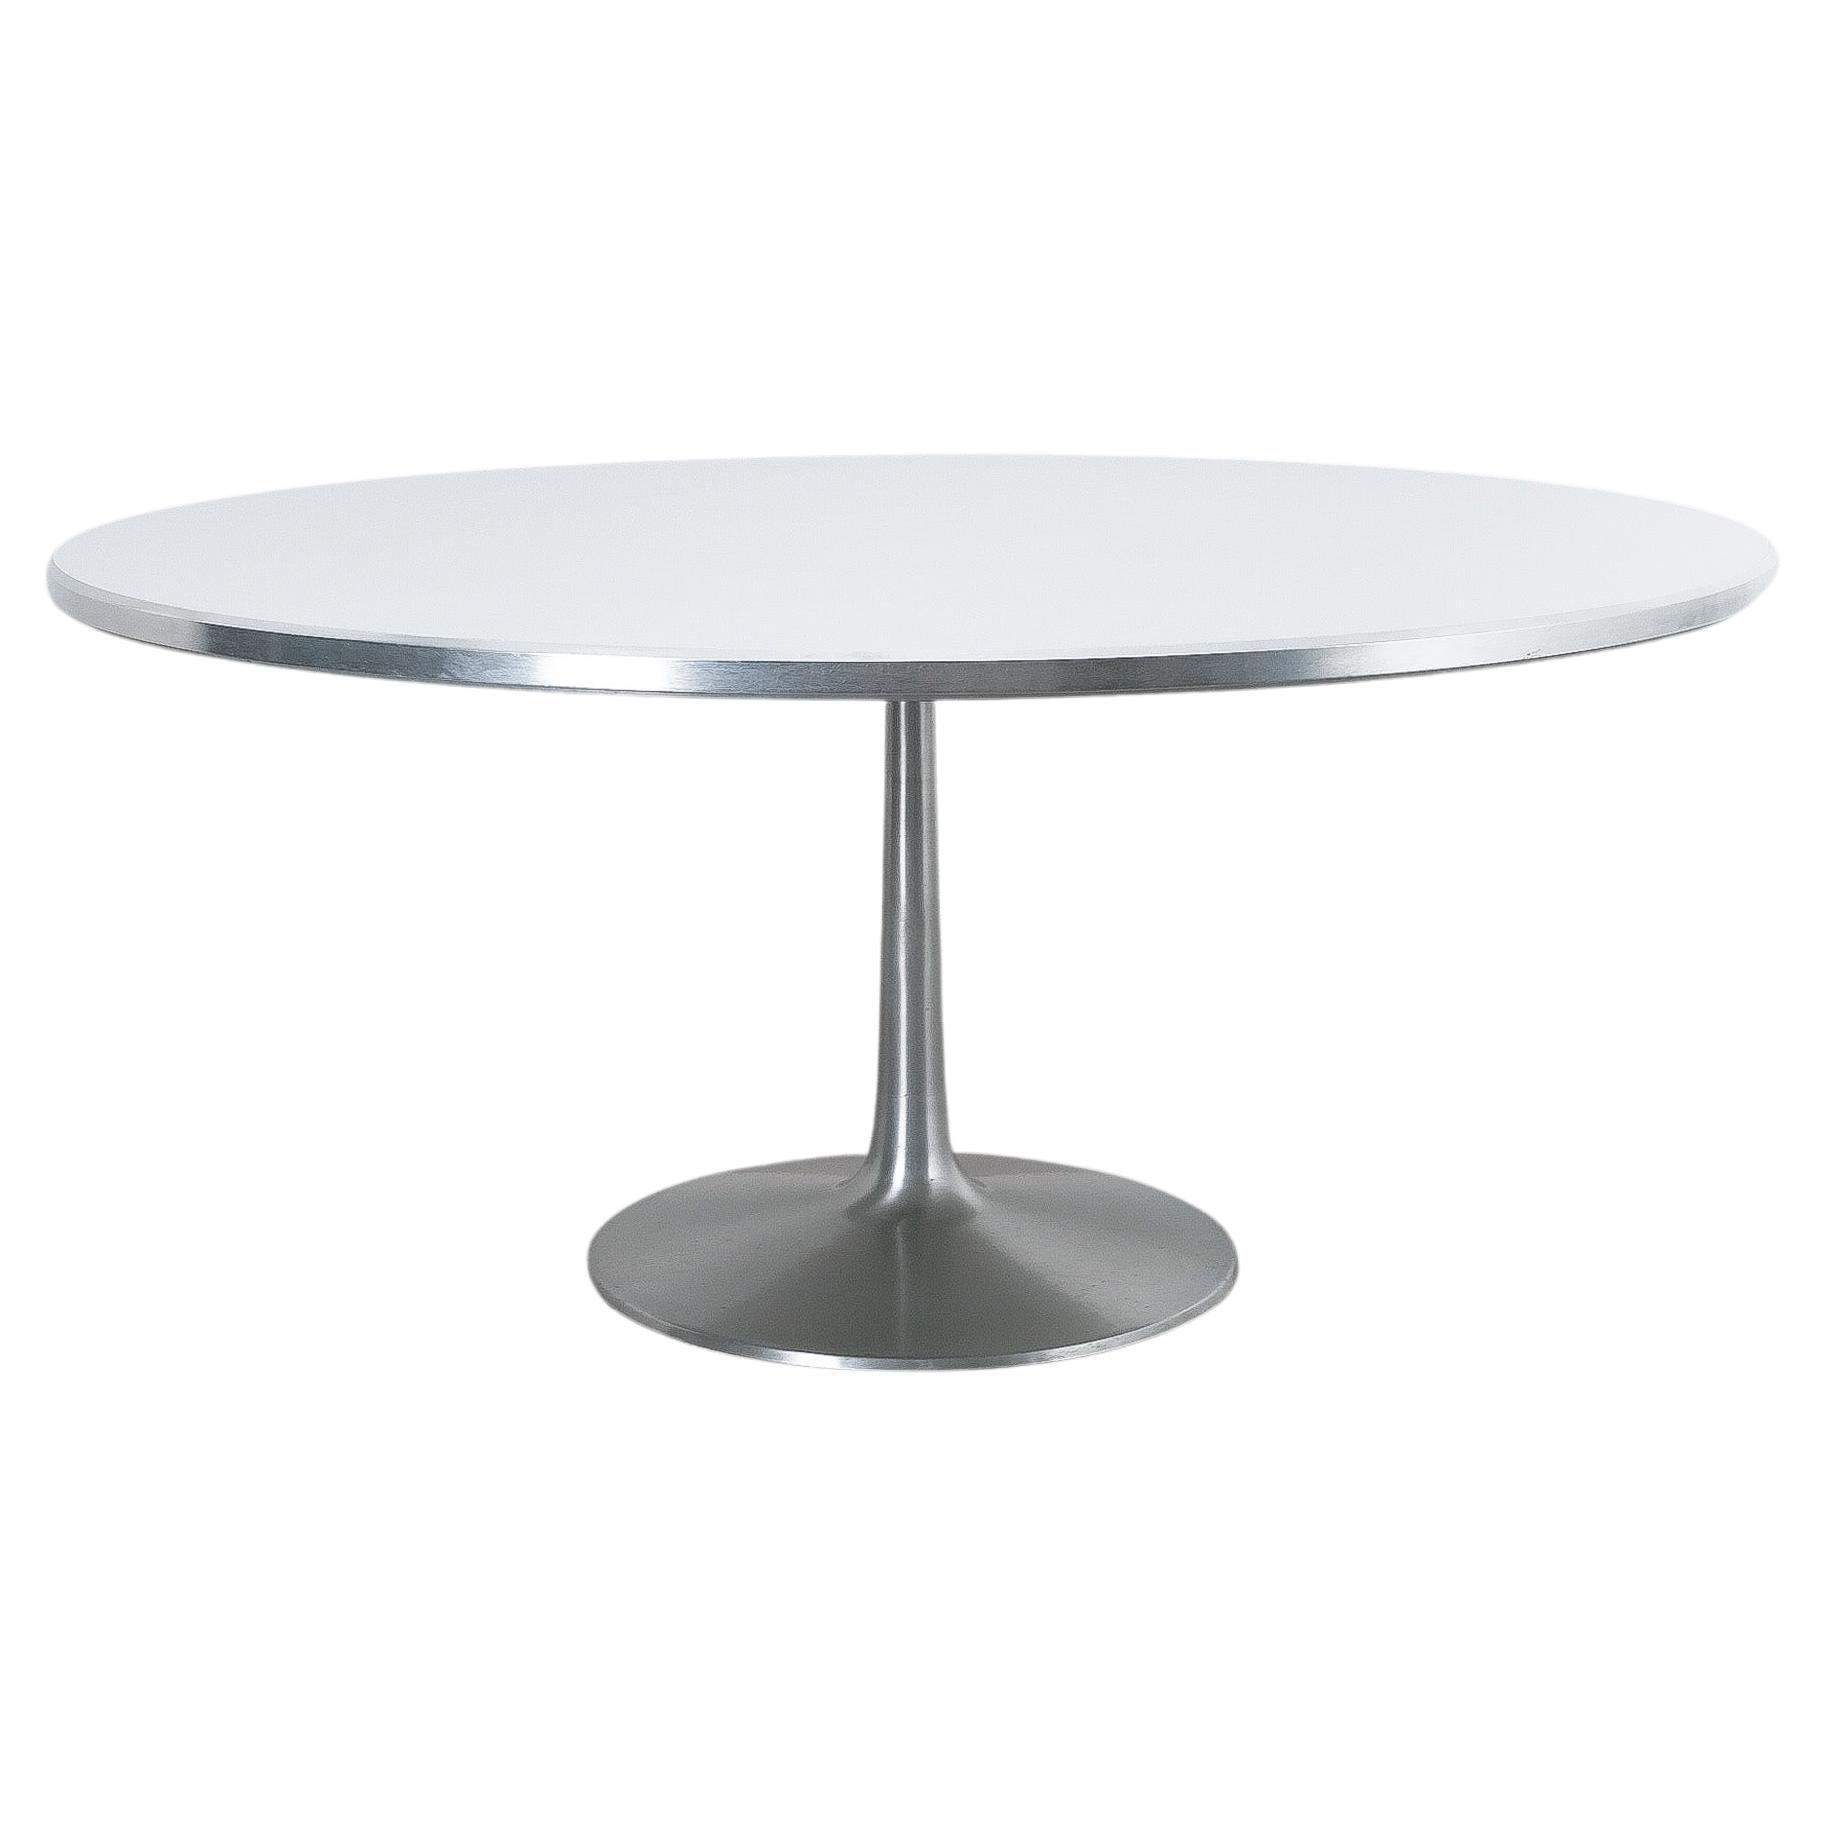 Poul Cadovius Pedestal Dining Table Largest Version Aluminum, Mid Century 